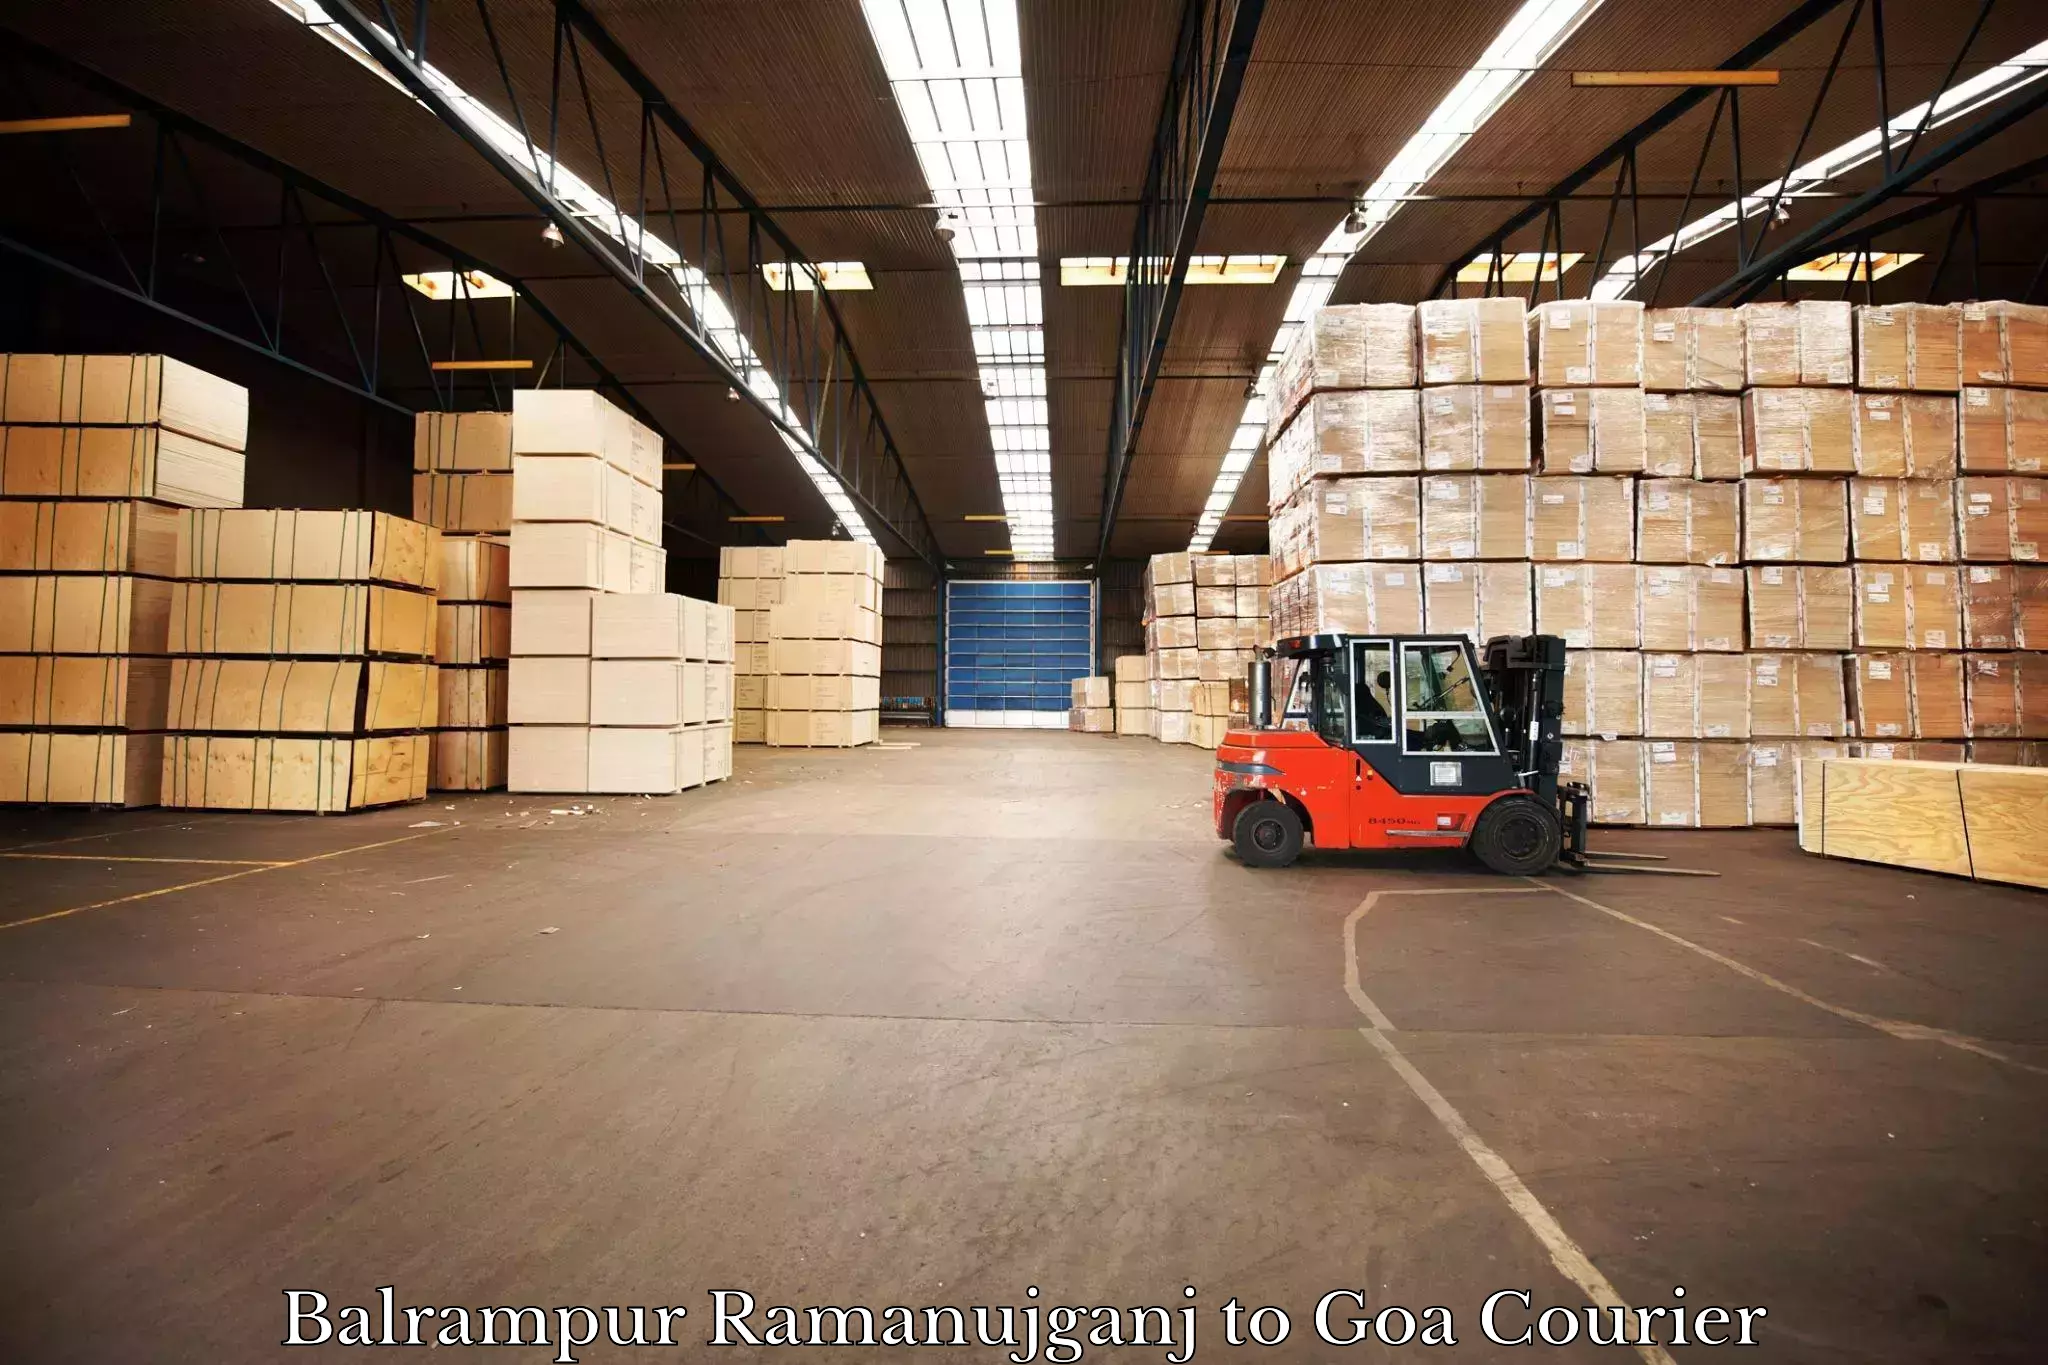 Courier service comparison Balrampur Ramanujganj to Vasco da Gama